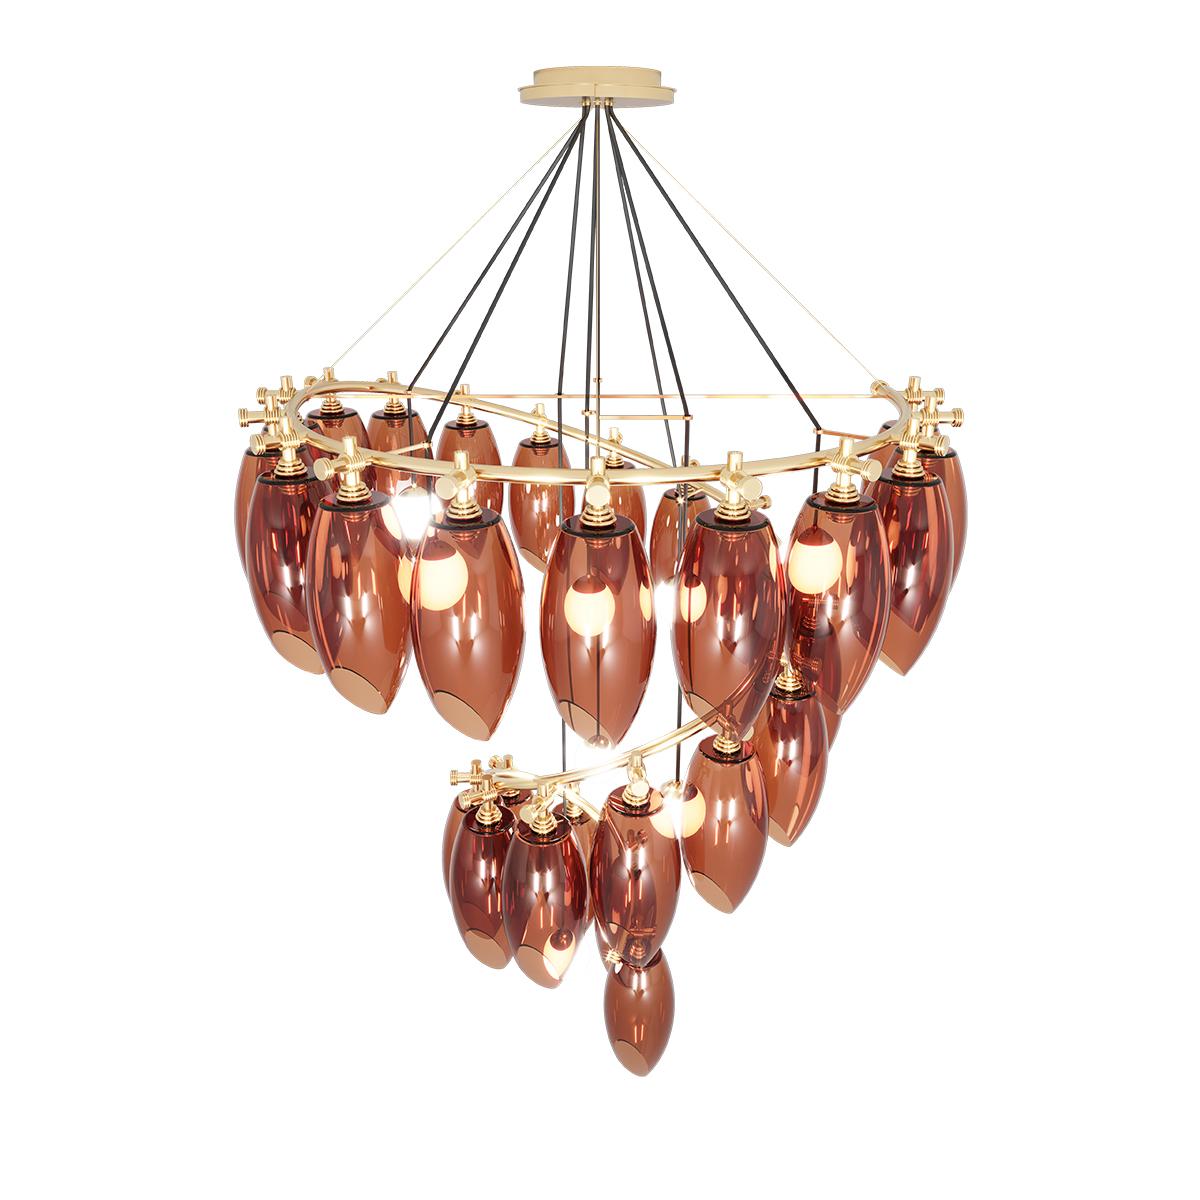 Portuguese 21st Century Art Deco Style Suspension Lamp Chandelier Blown Glass Bulbs For Sale